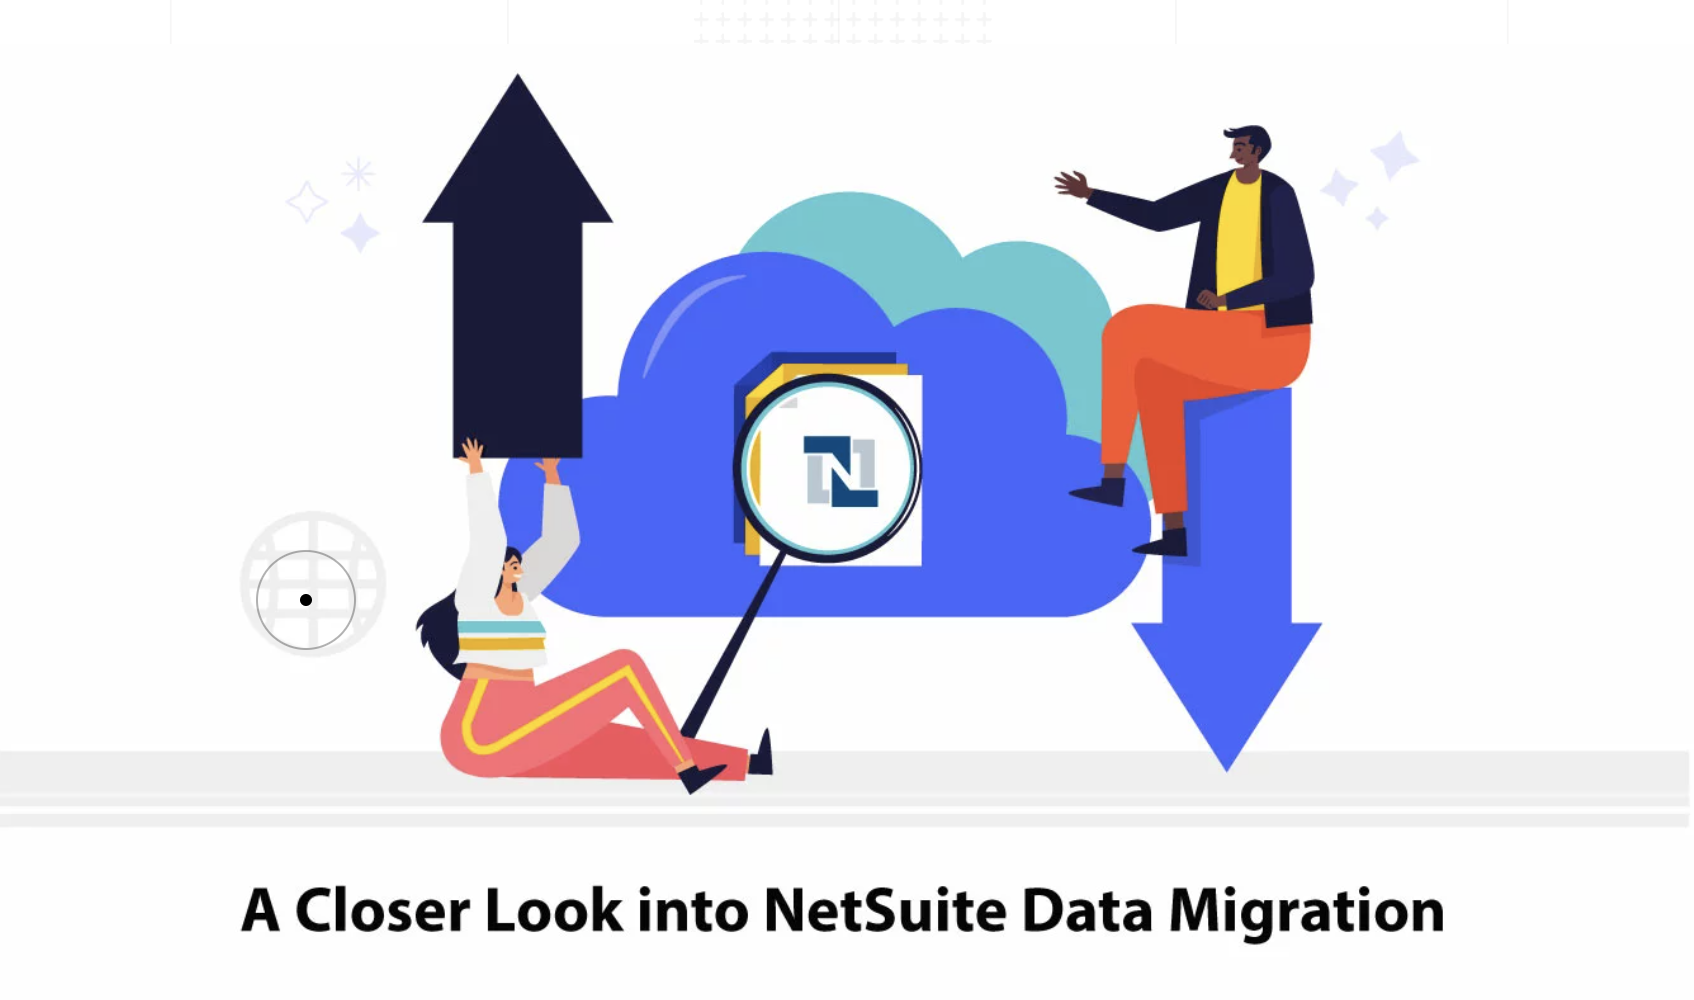 NetSuite Data Migration Best Practices